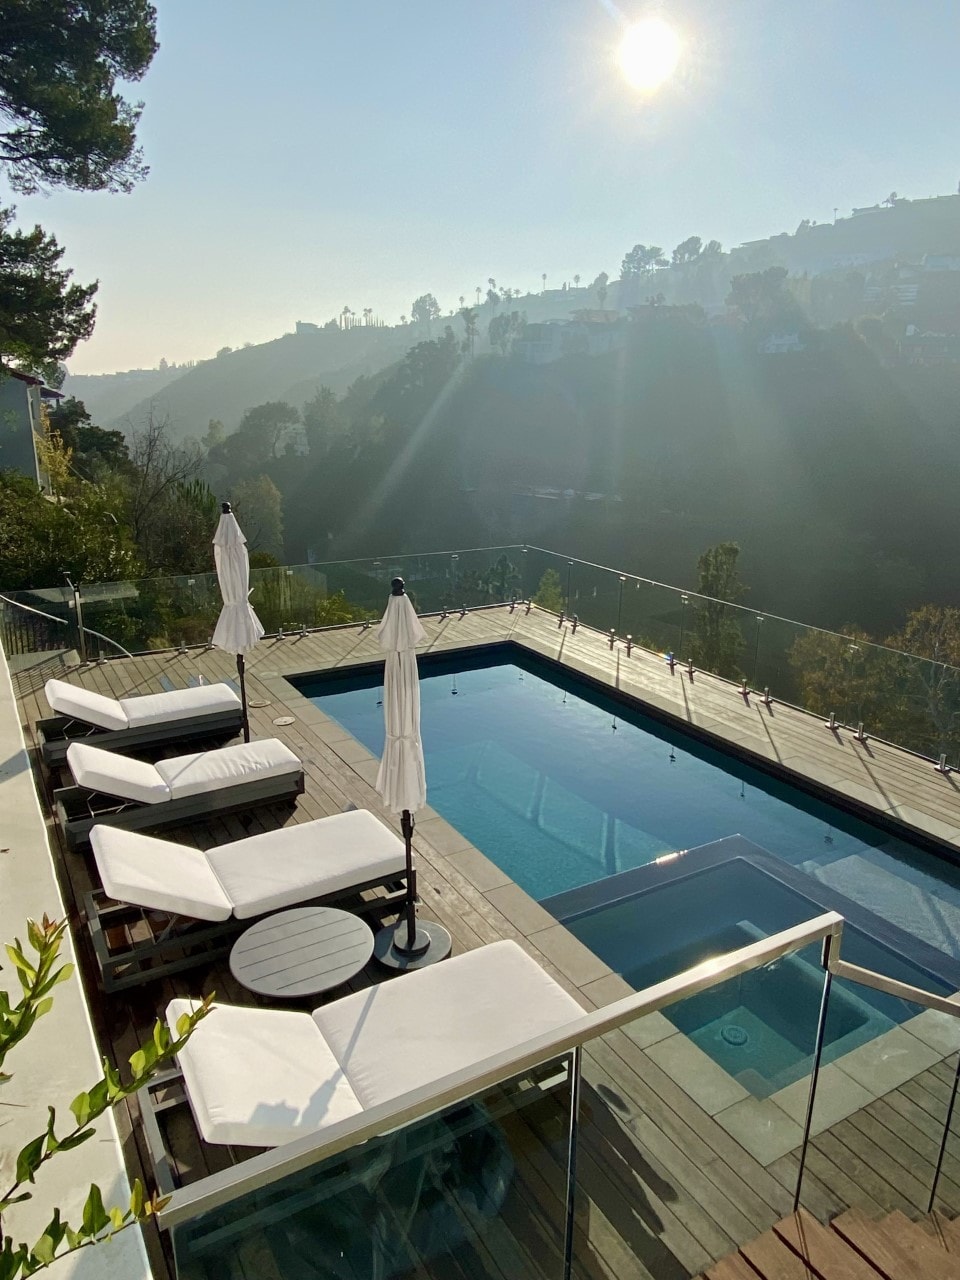 西好莱坞山（ West Hollywood Hills ）泳池景观房源